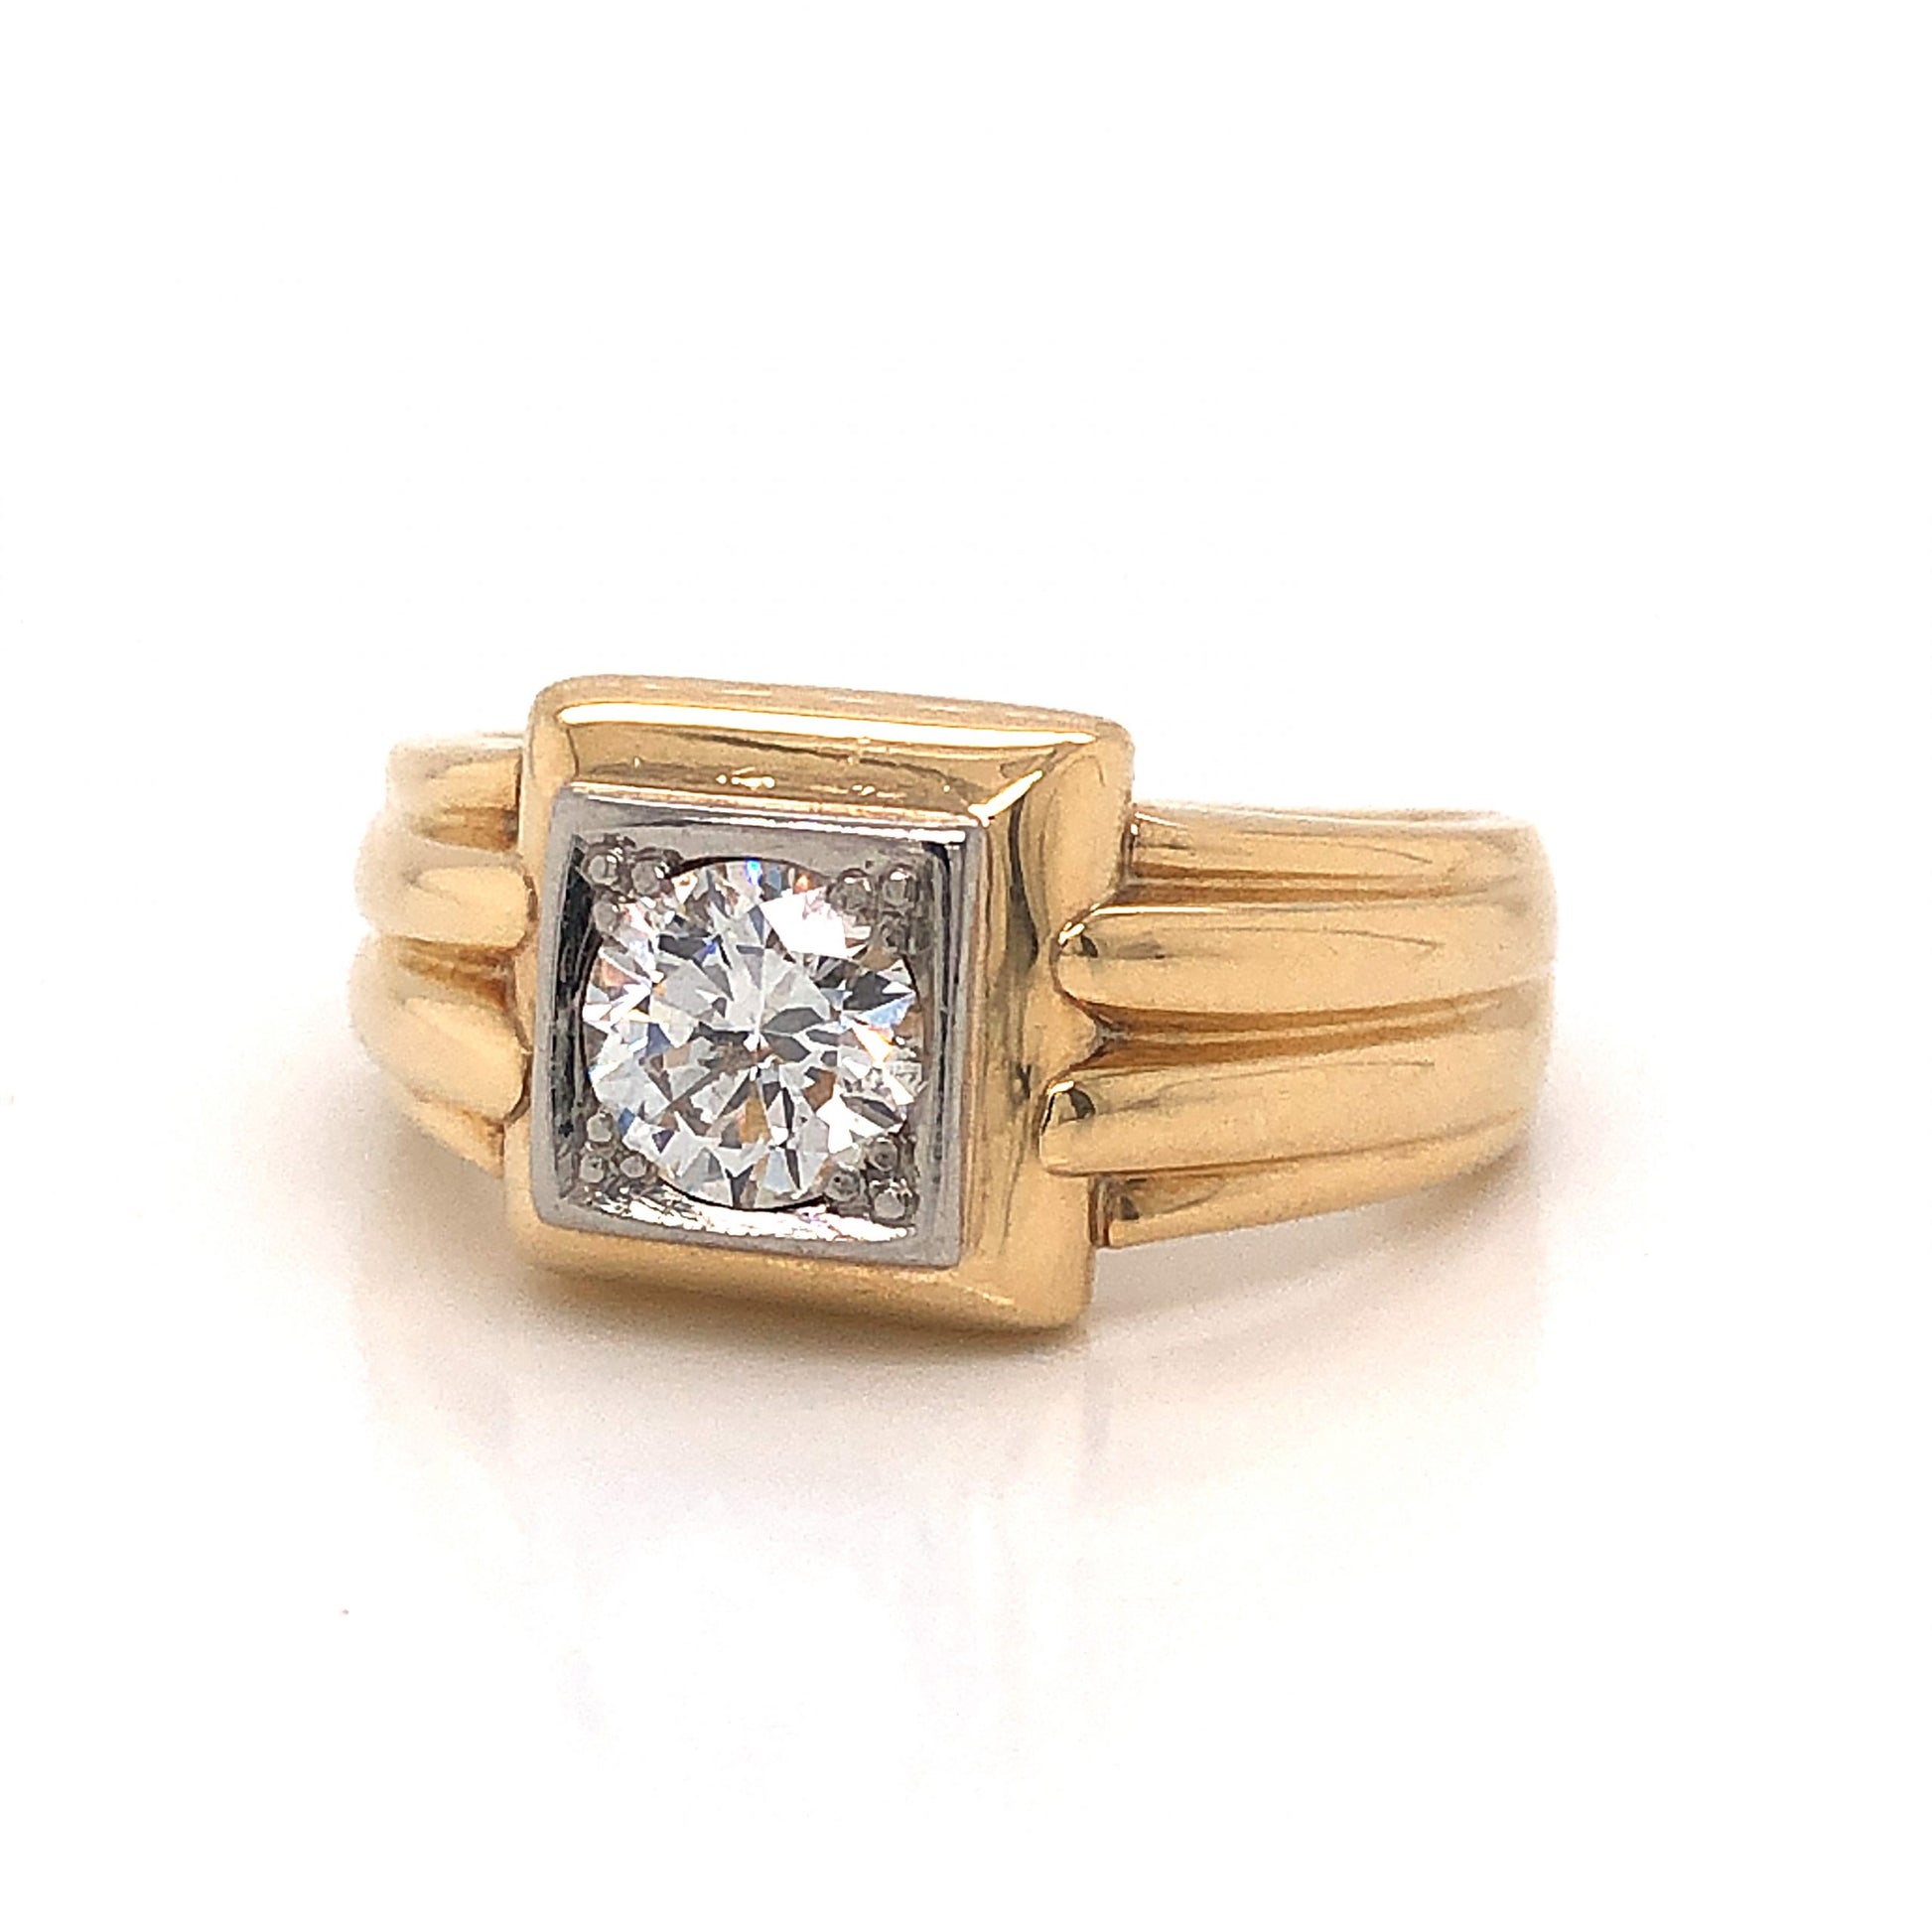 .70 Mid-Century Diamond Engagement Ring in 14k Yellow GoldComposition: 14 Karat White Gold/14 Karat Yellow Gold Ring Size: 8 Total Diamond Weight: .70ct Total Gram Weight: 7.6 g Inscription: 14
      